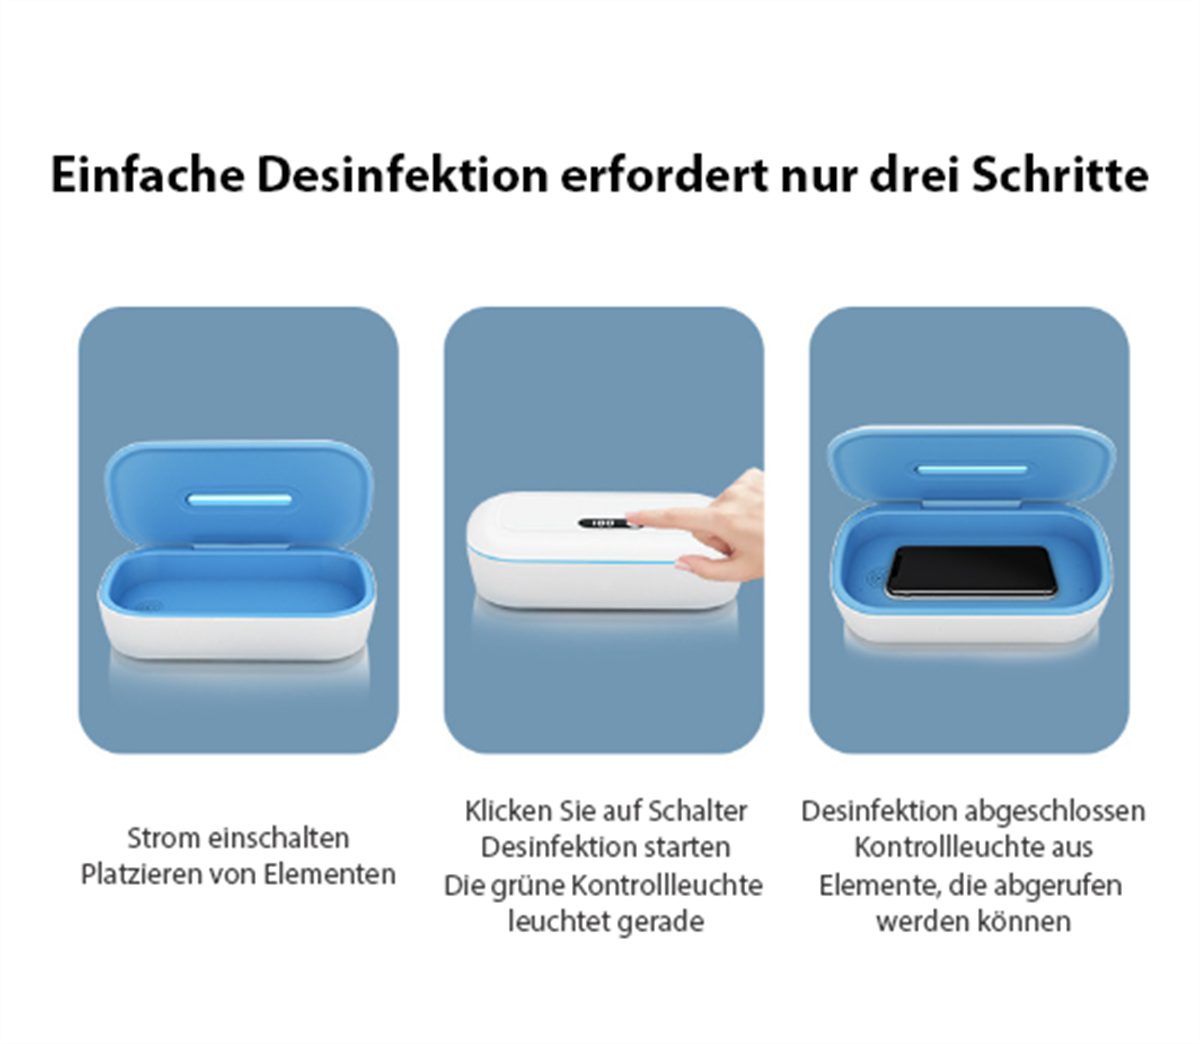 selected UV-Desinfektionsbox Schmuck carefully LED-Digitalanzeige Handy Zahnbürste Ultraschallreiniger